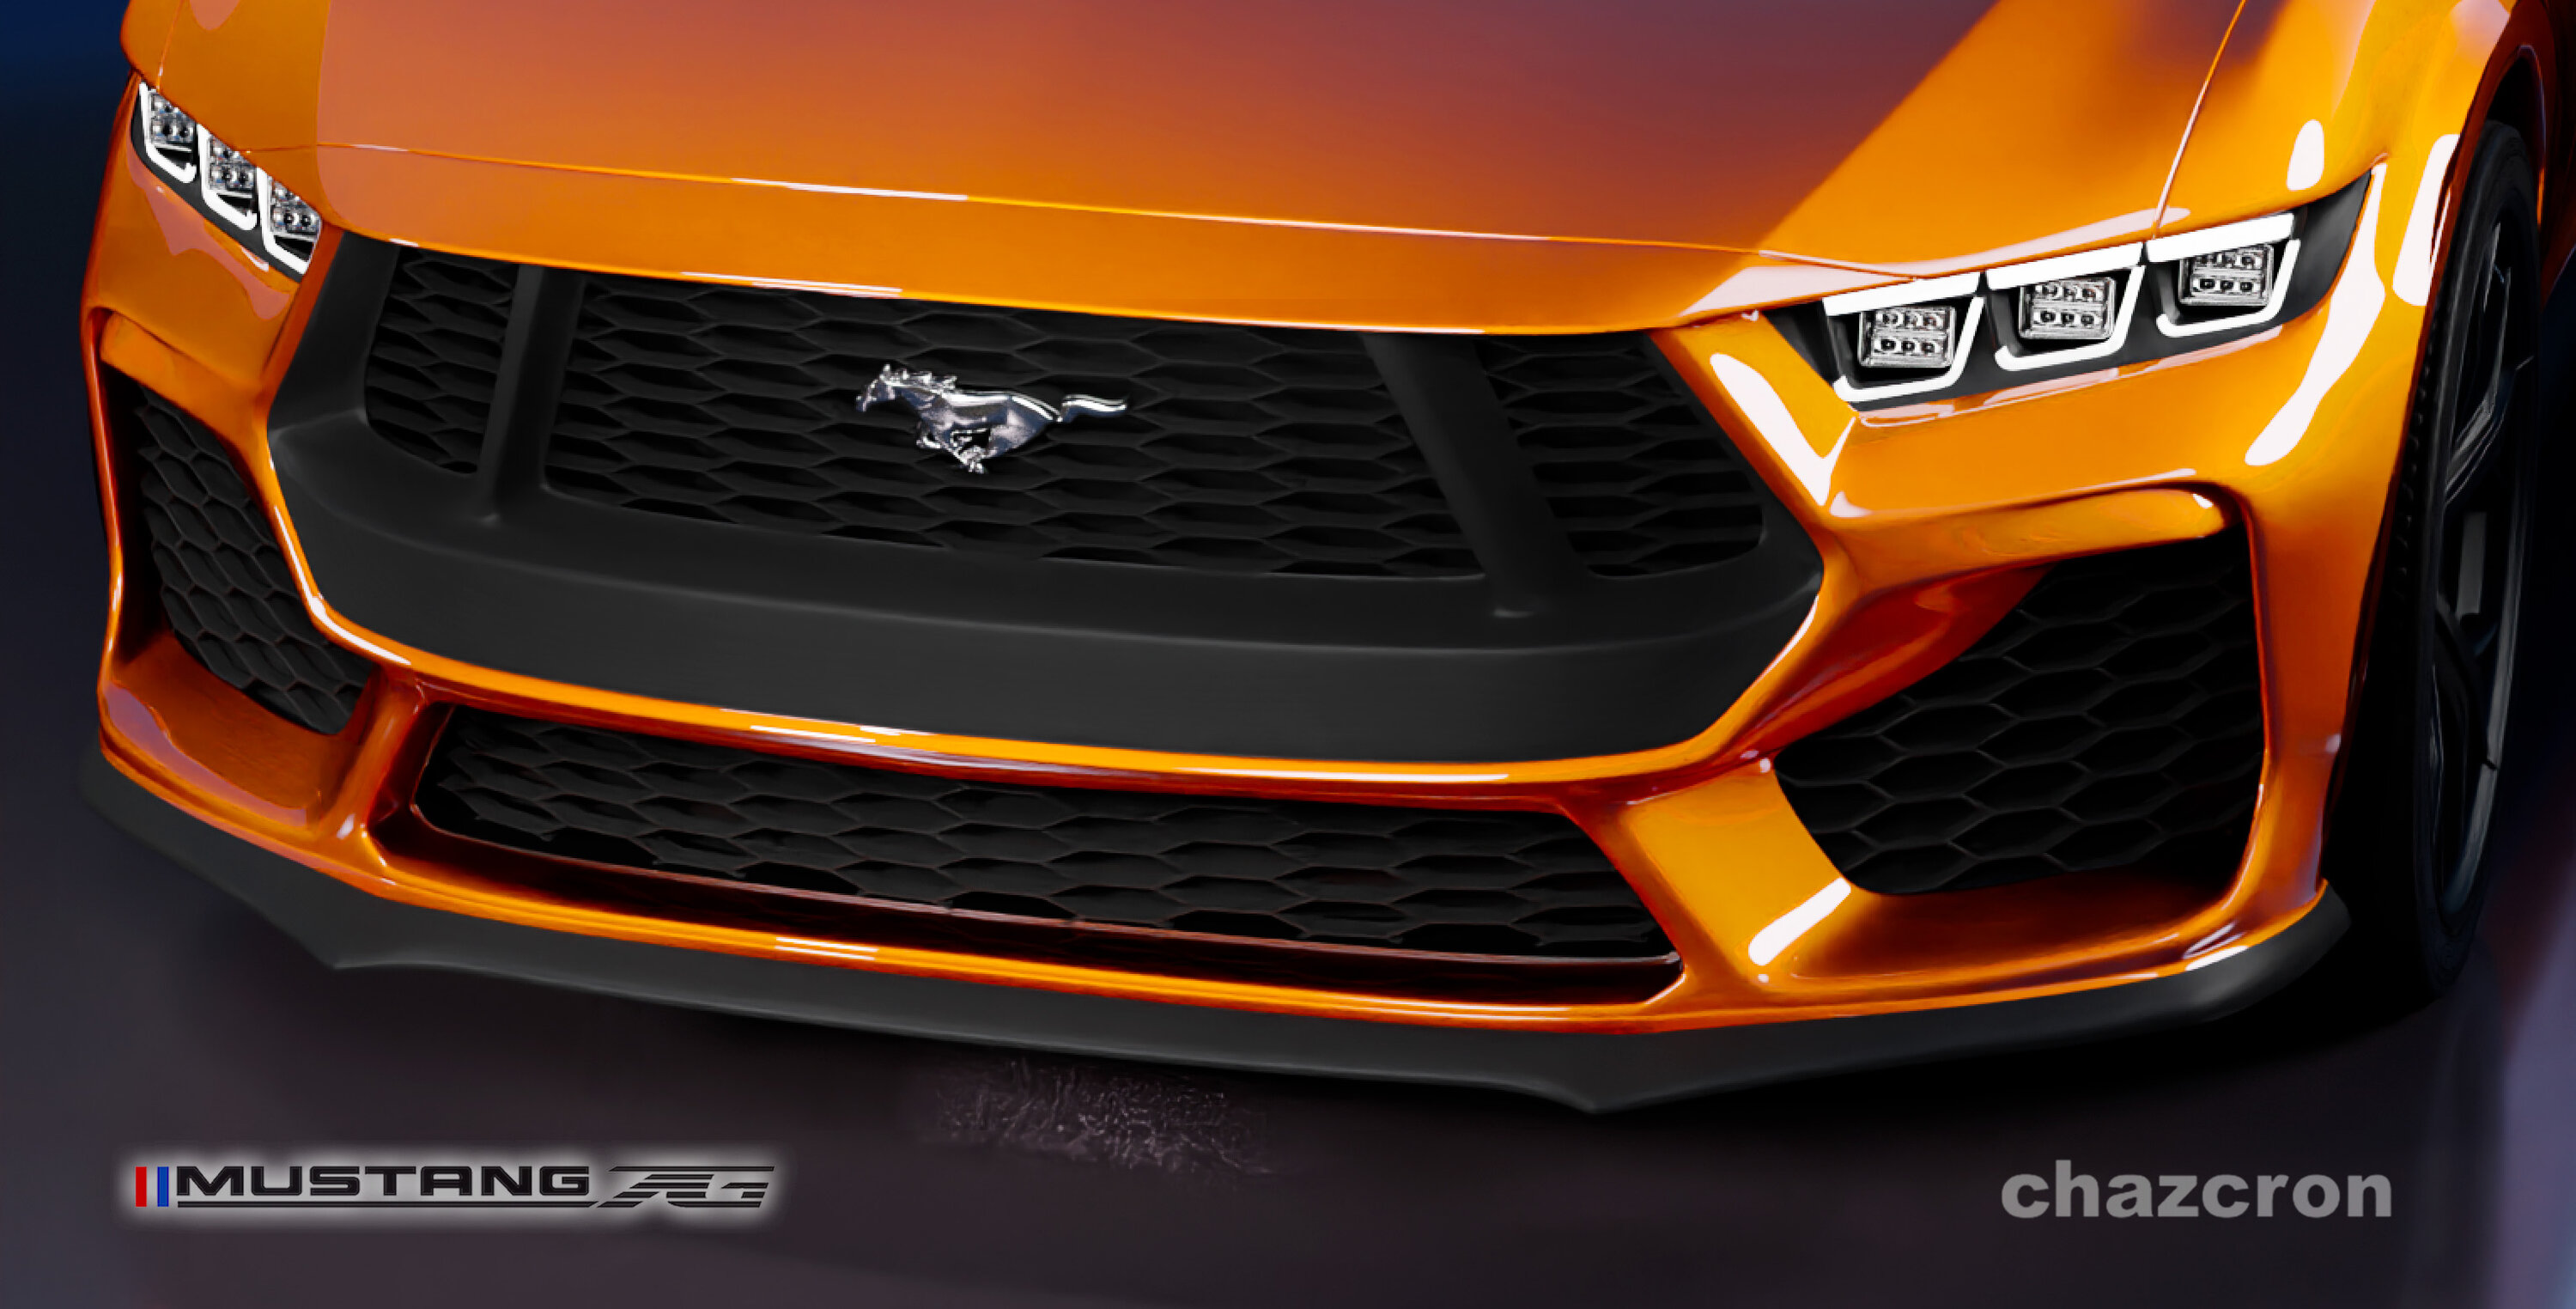 S650 Mustang chazcron weighs in... 7th gen 2023 Mustang S650 3D model & renderings in several colors! ORanGo